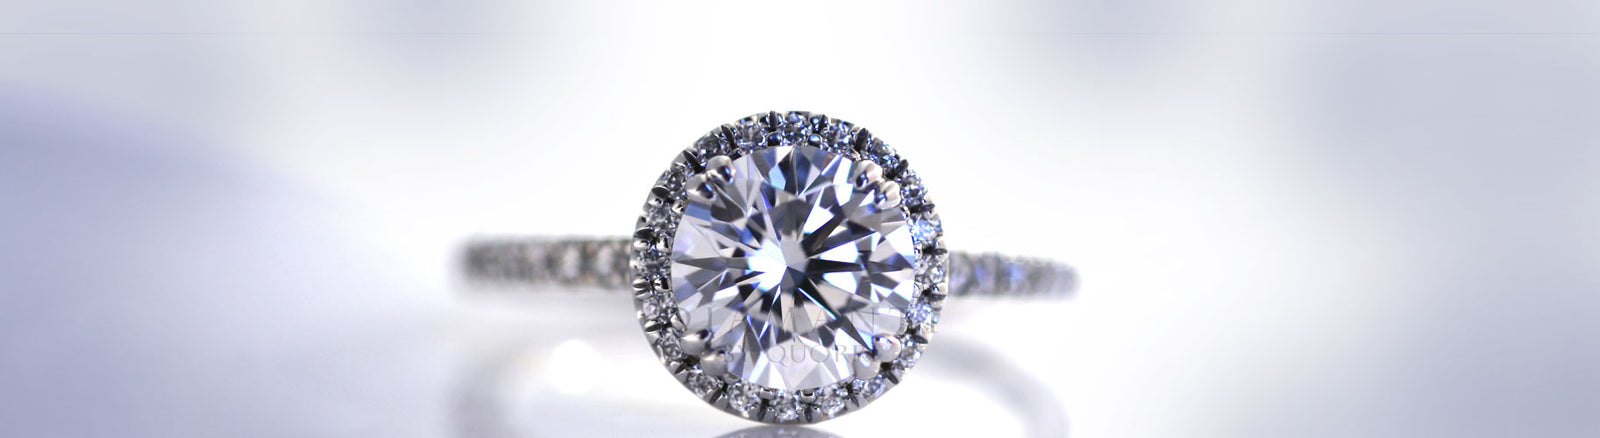 compare Quorri lab diamonds to the best mined diamonds